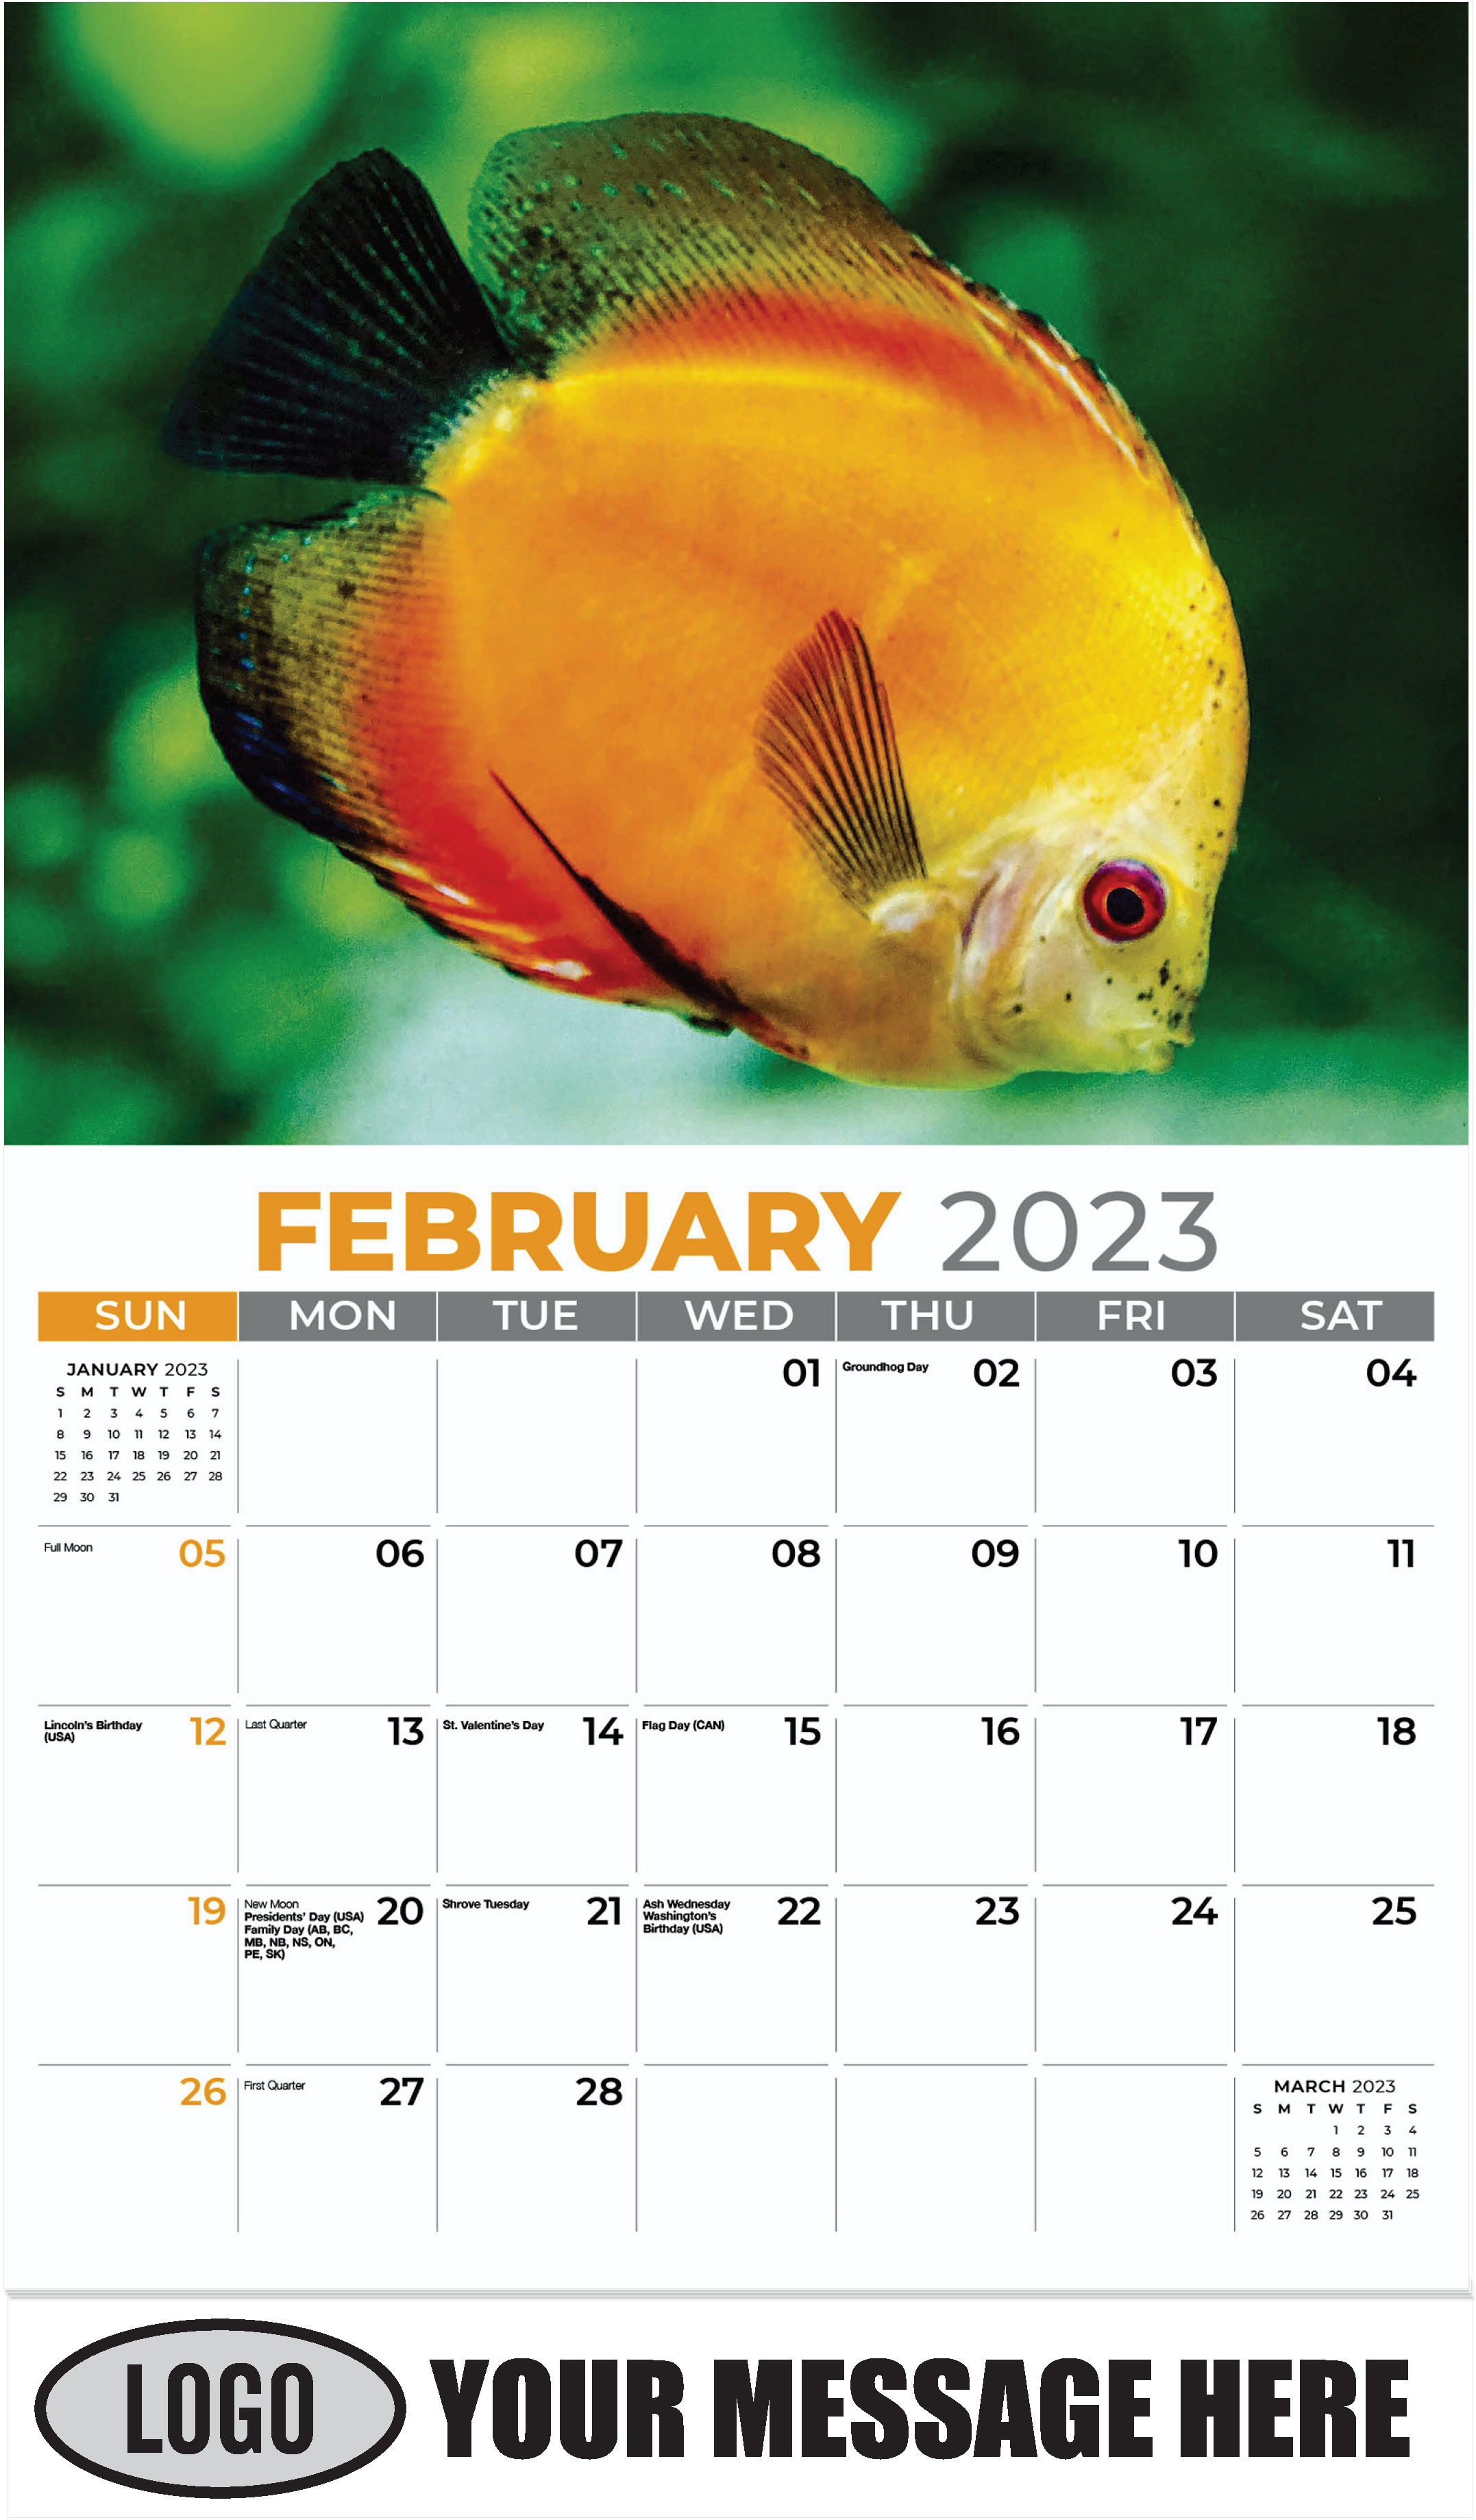 Orange discus fish - February - Pets 2023 Promotional Calendar